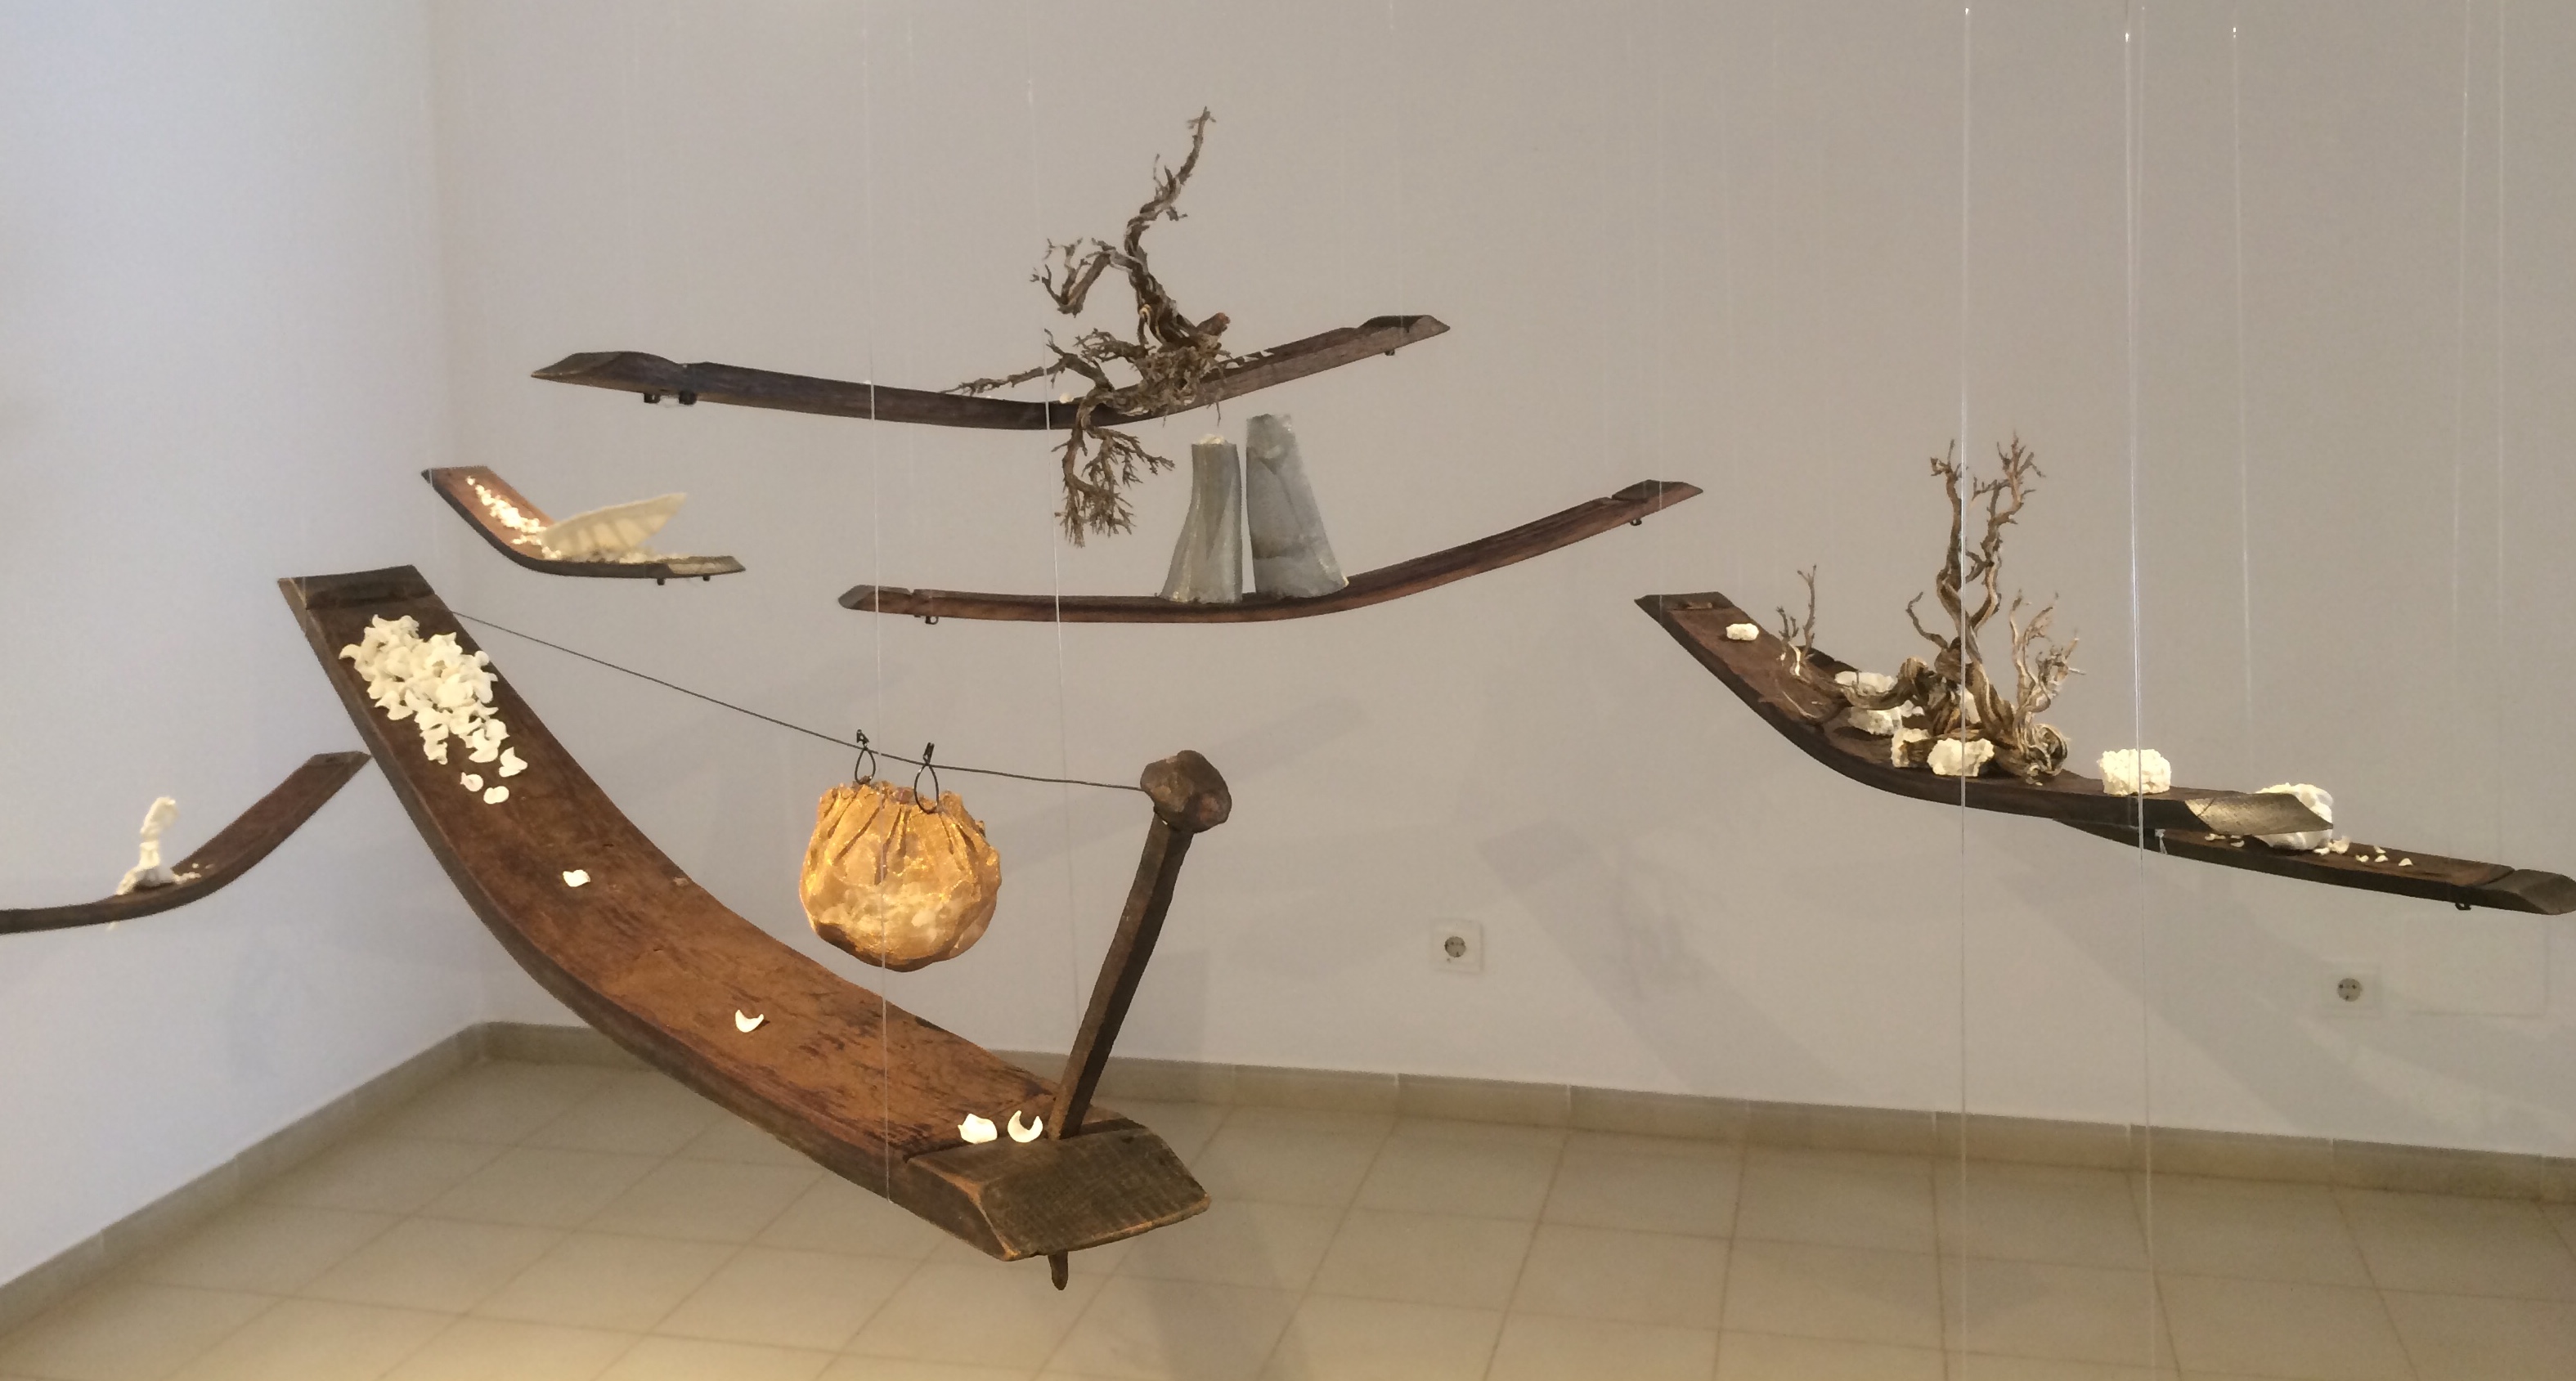 Esculturas ceràmicas sobre duelas. Exposición "Sensaciones" (2018) - Ana Felipe Royo